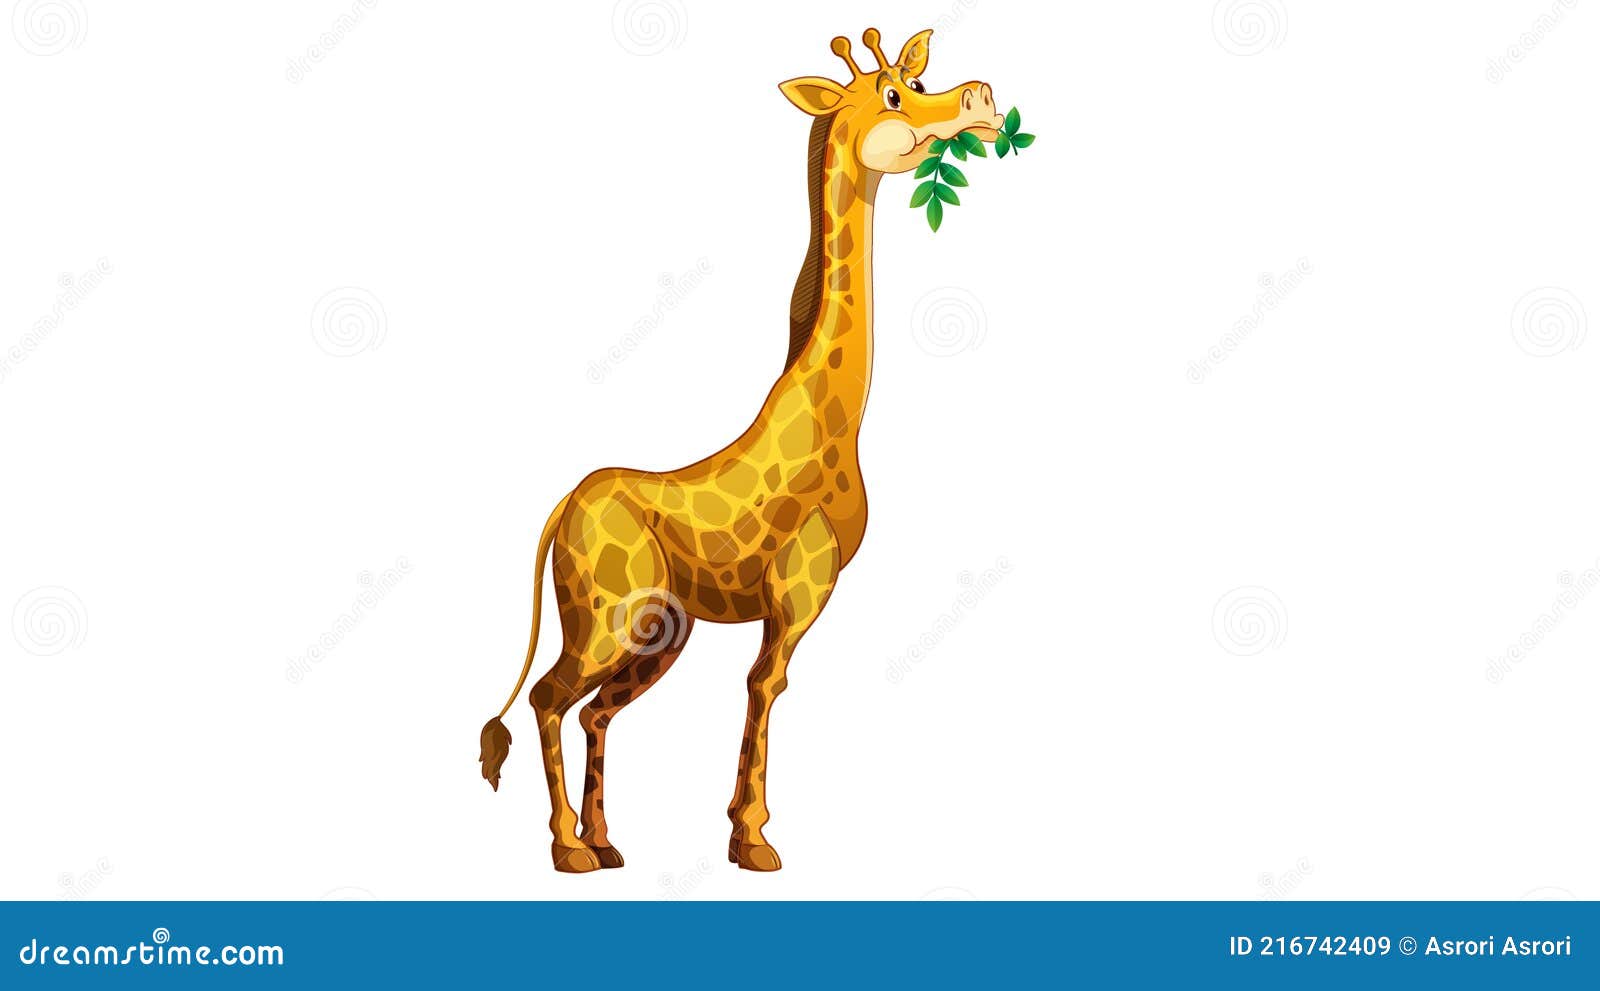 Cute Giraffe Cartoon Animation. Stock Vector - Illustration of animal,  cartoon: 216742409